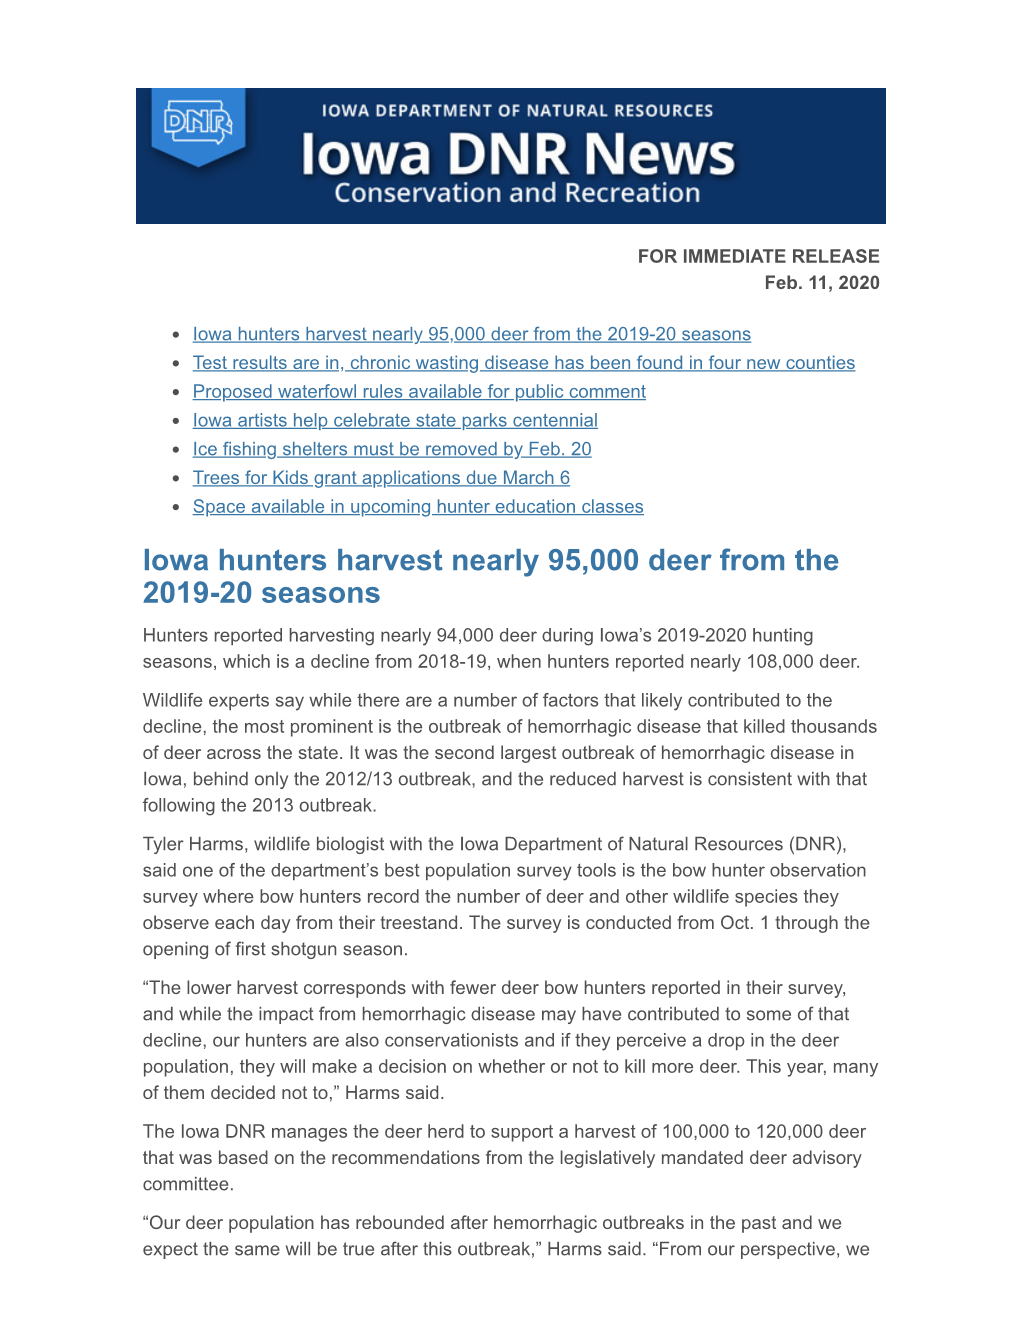 Iowa Hunters Harvest Nearly 95,000 Deer from the 2019-20 Seasons